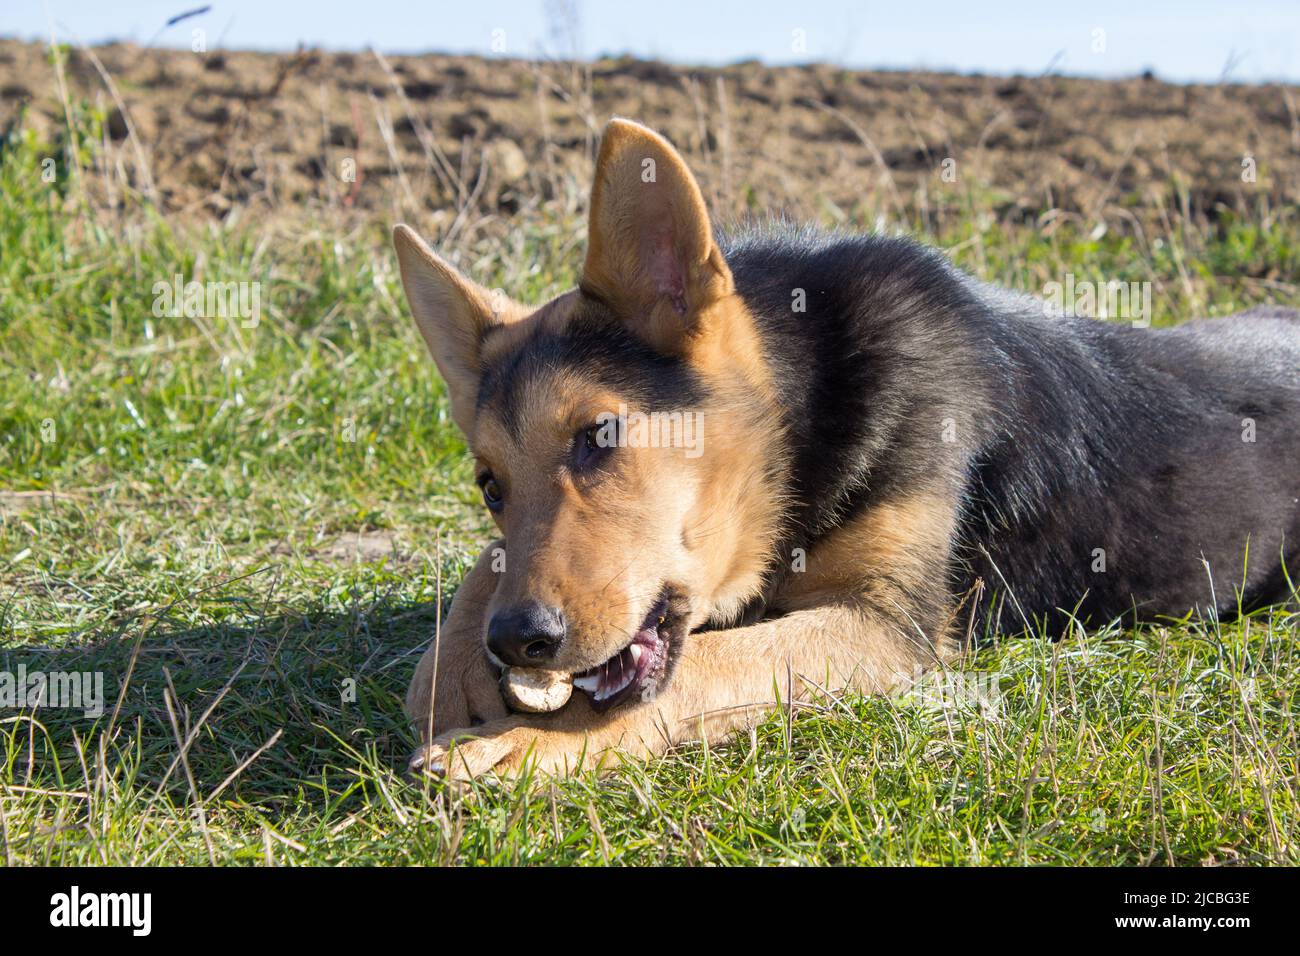 German Shepherd dog is biting teeth and a tree branch Stock Photo